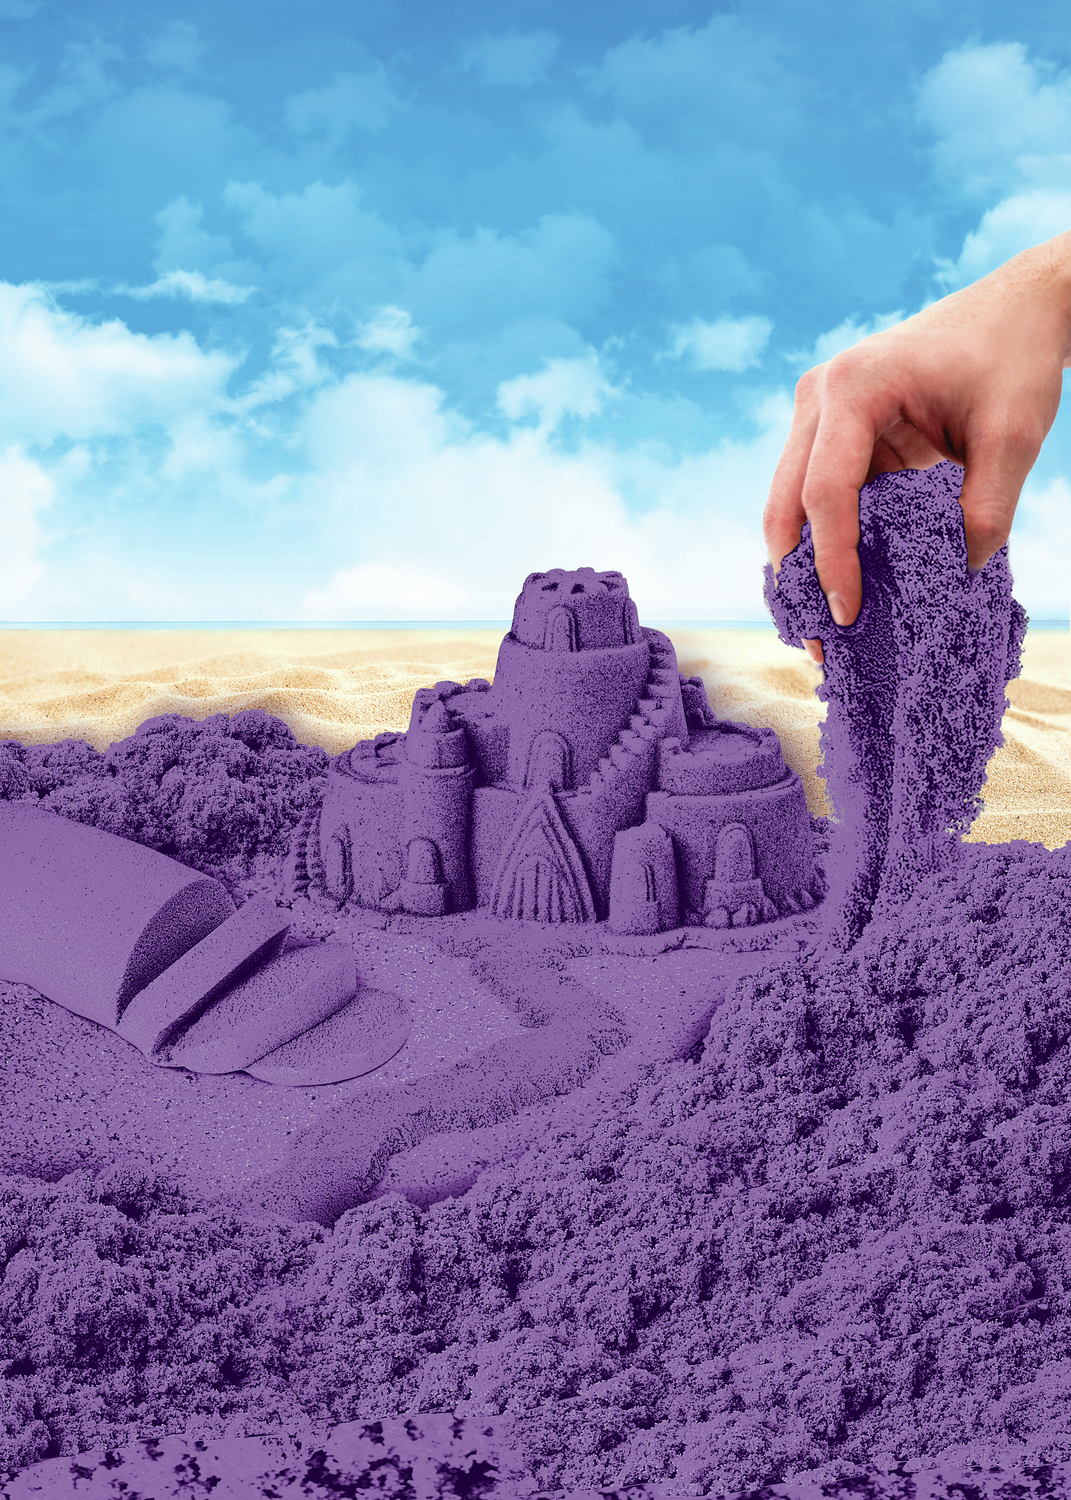  Kinetic Sand, The Original Moldable Sensory Play Sand, Pink, 2  lb. Resealable Bag, Ages 3+ : Toys & Games